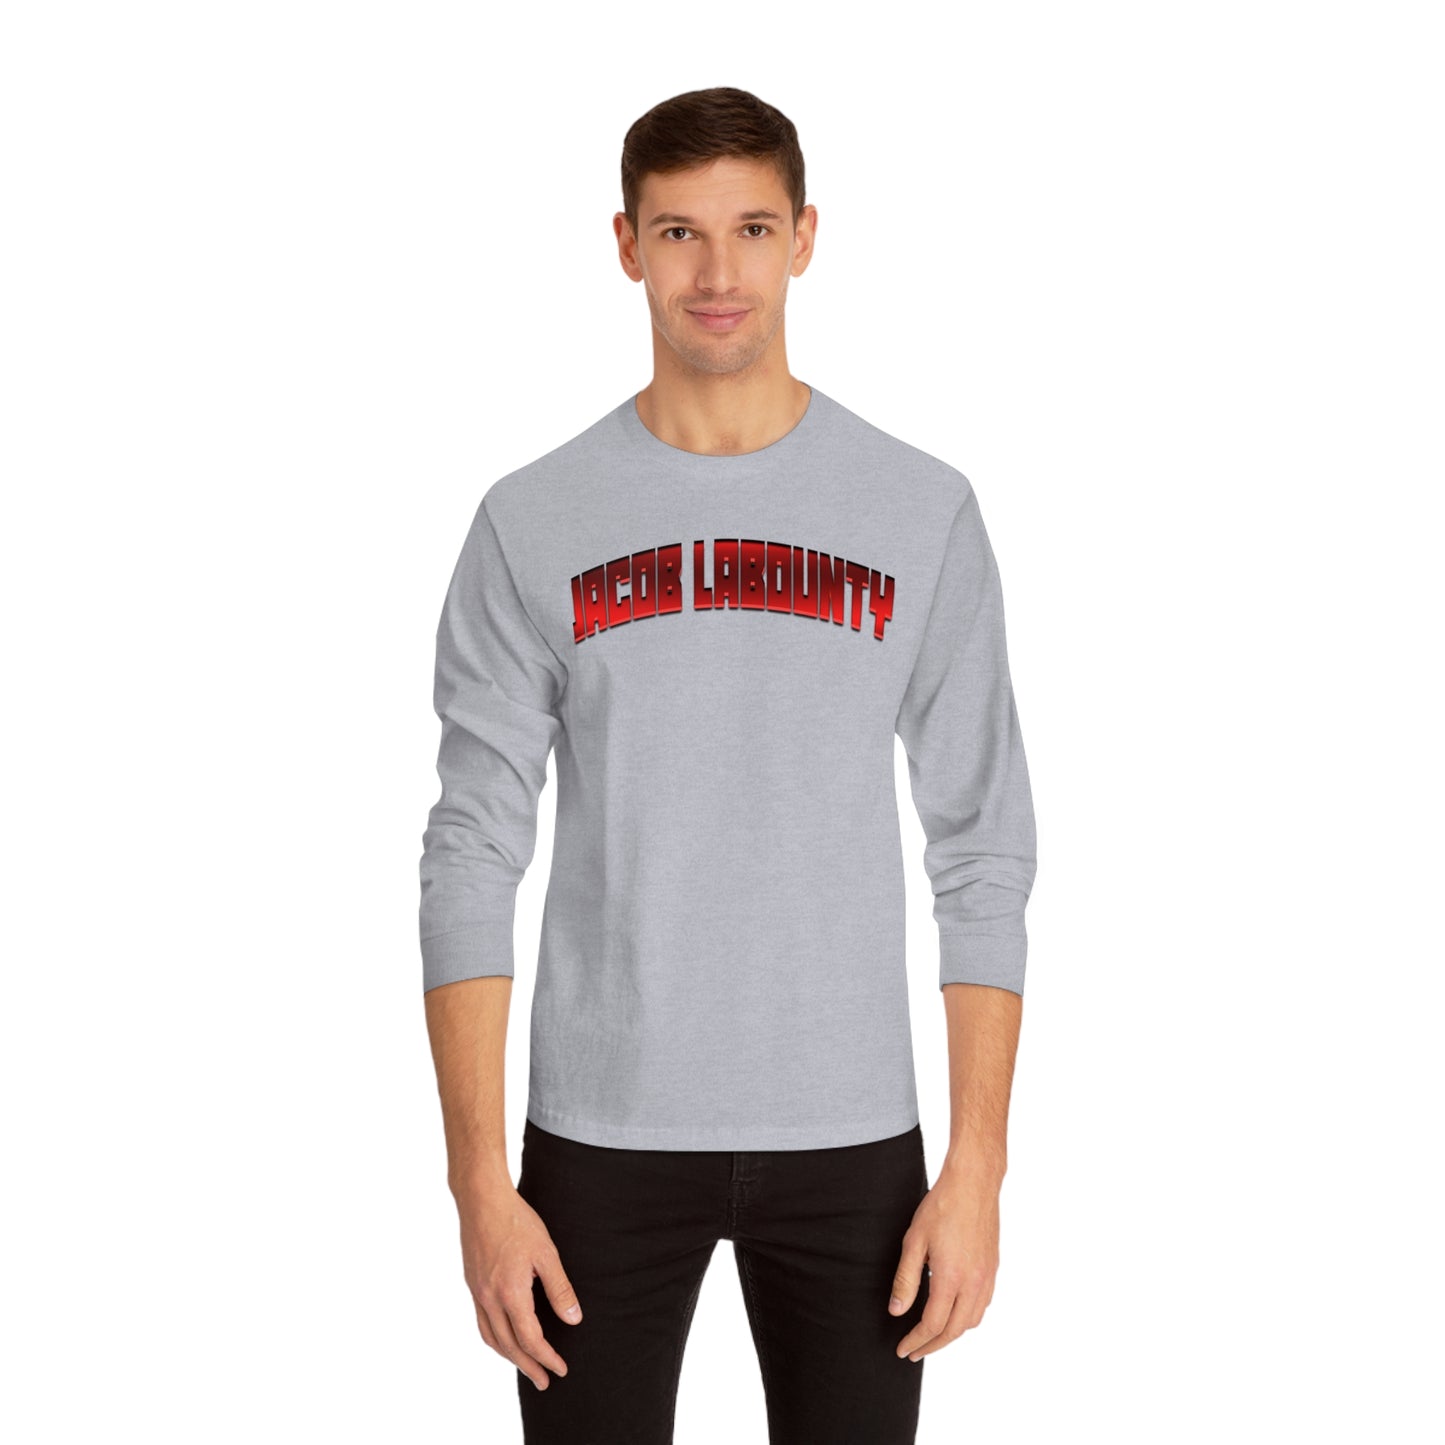 Jacob Labounty Classic Long Sleeve T-Shirt